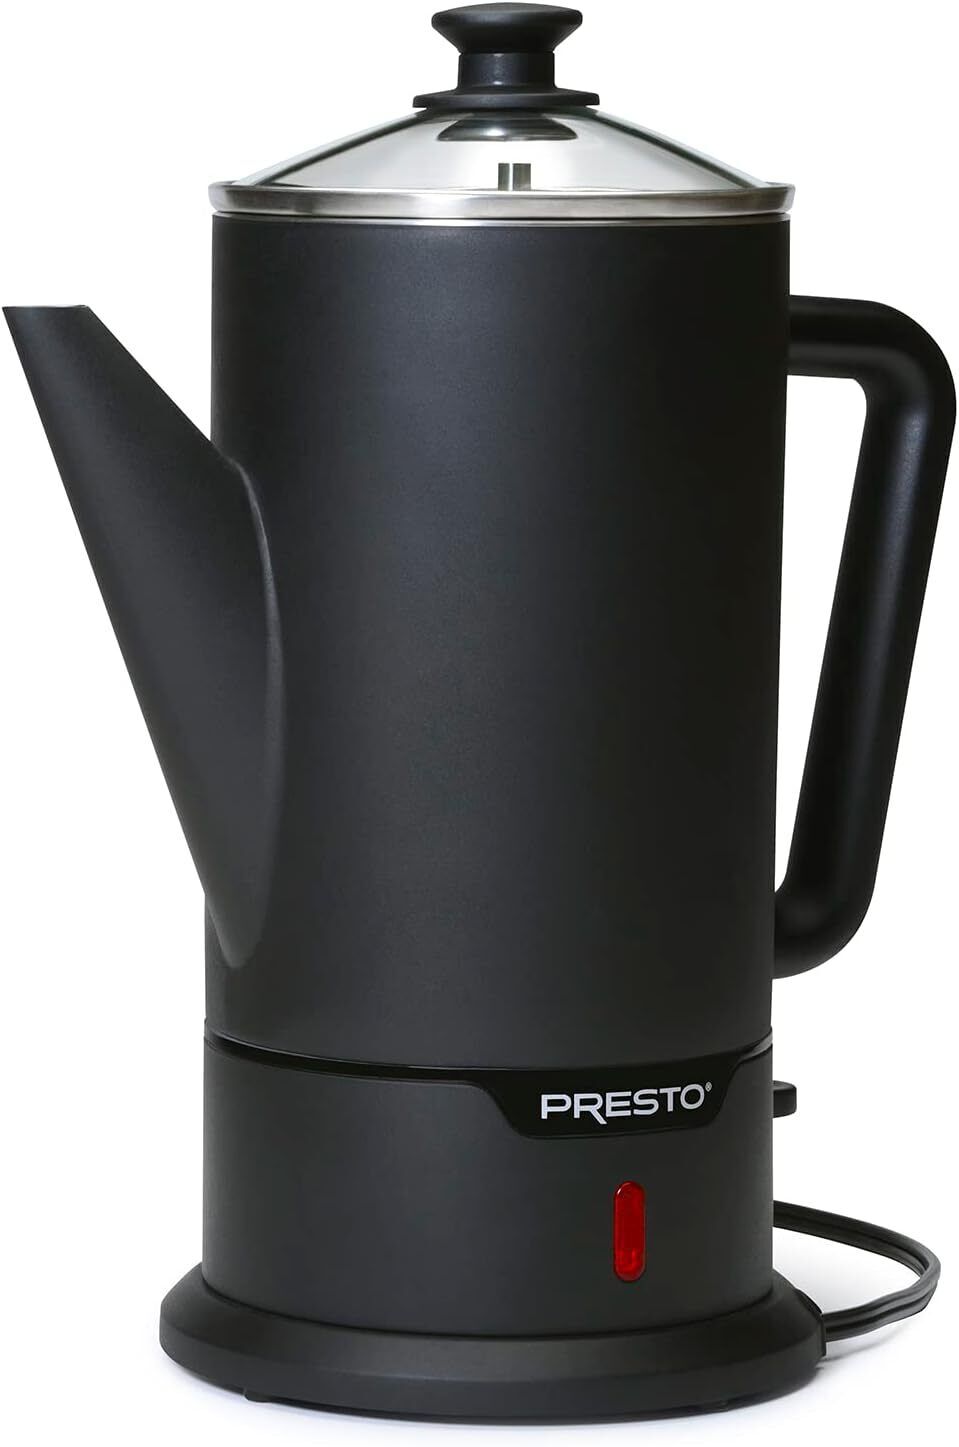 Presto 02815 12-Cup Cordless Stainless Steel Coffee Percolator - Modern Design,